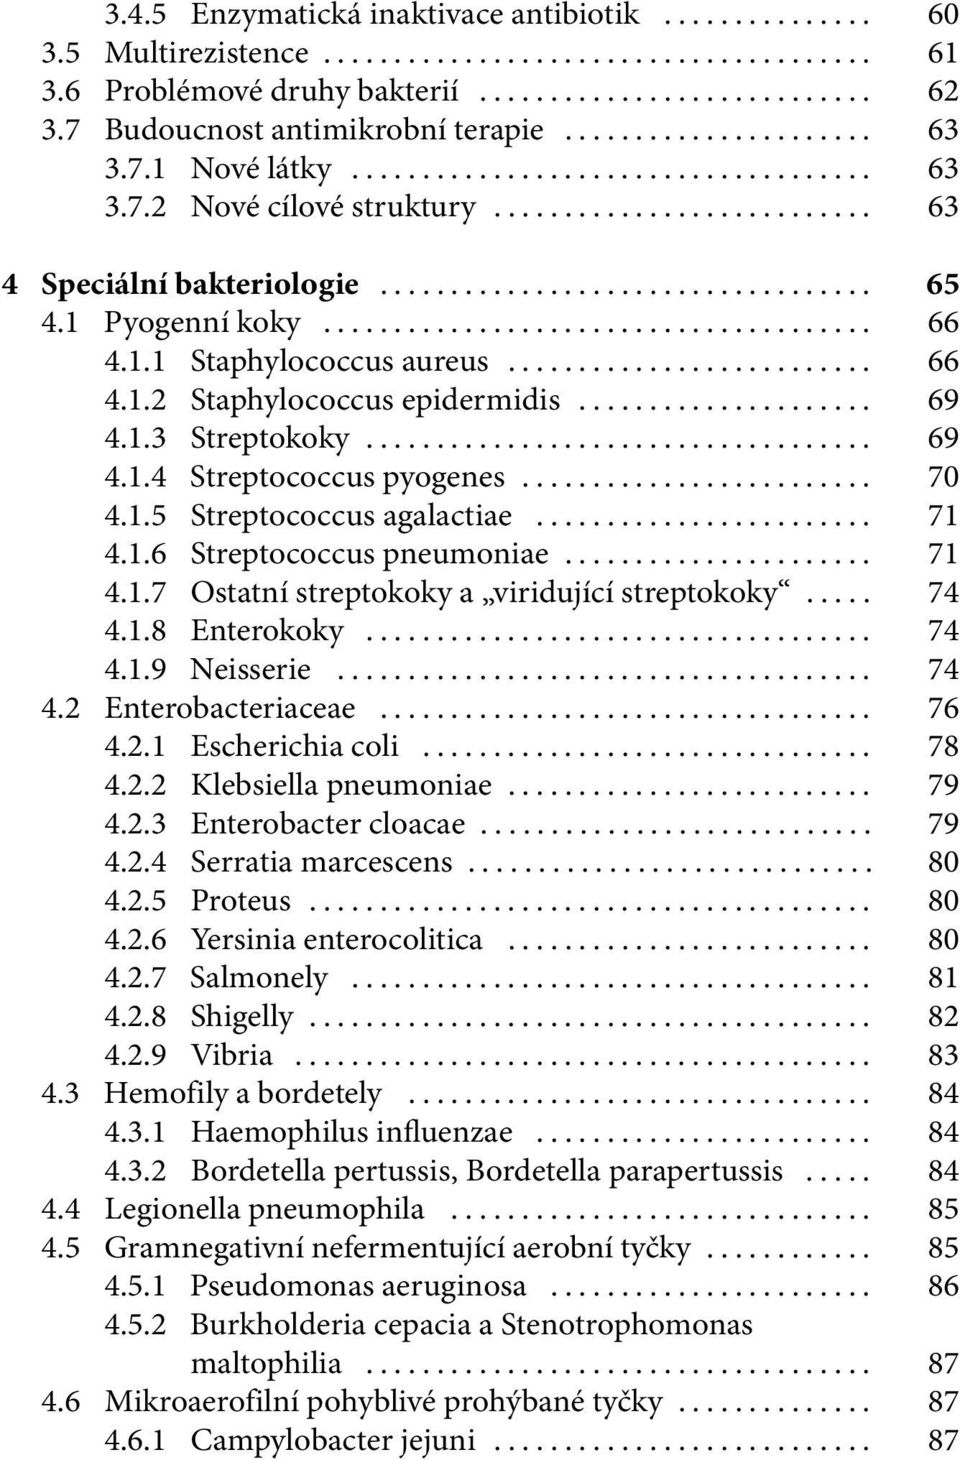 .. 71 4.1.6 Streptococcus pneumoniae... 71 4.1.7 Ostatní streptokoky a viridující streptokoky... 74 4.1.8 Enterokoky... 74 4.1.9 Neisserie... 74 4.2 Enterobacteriaceae... 76 4.2.1 Escherichia coli.